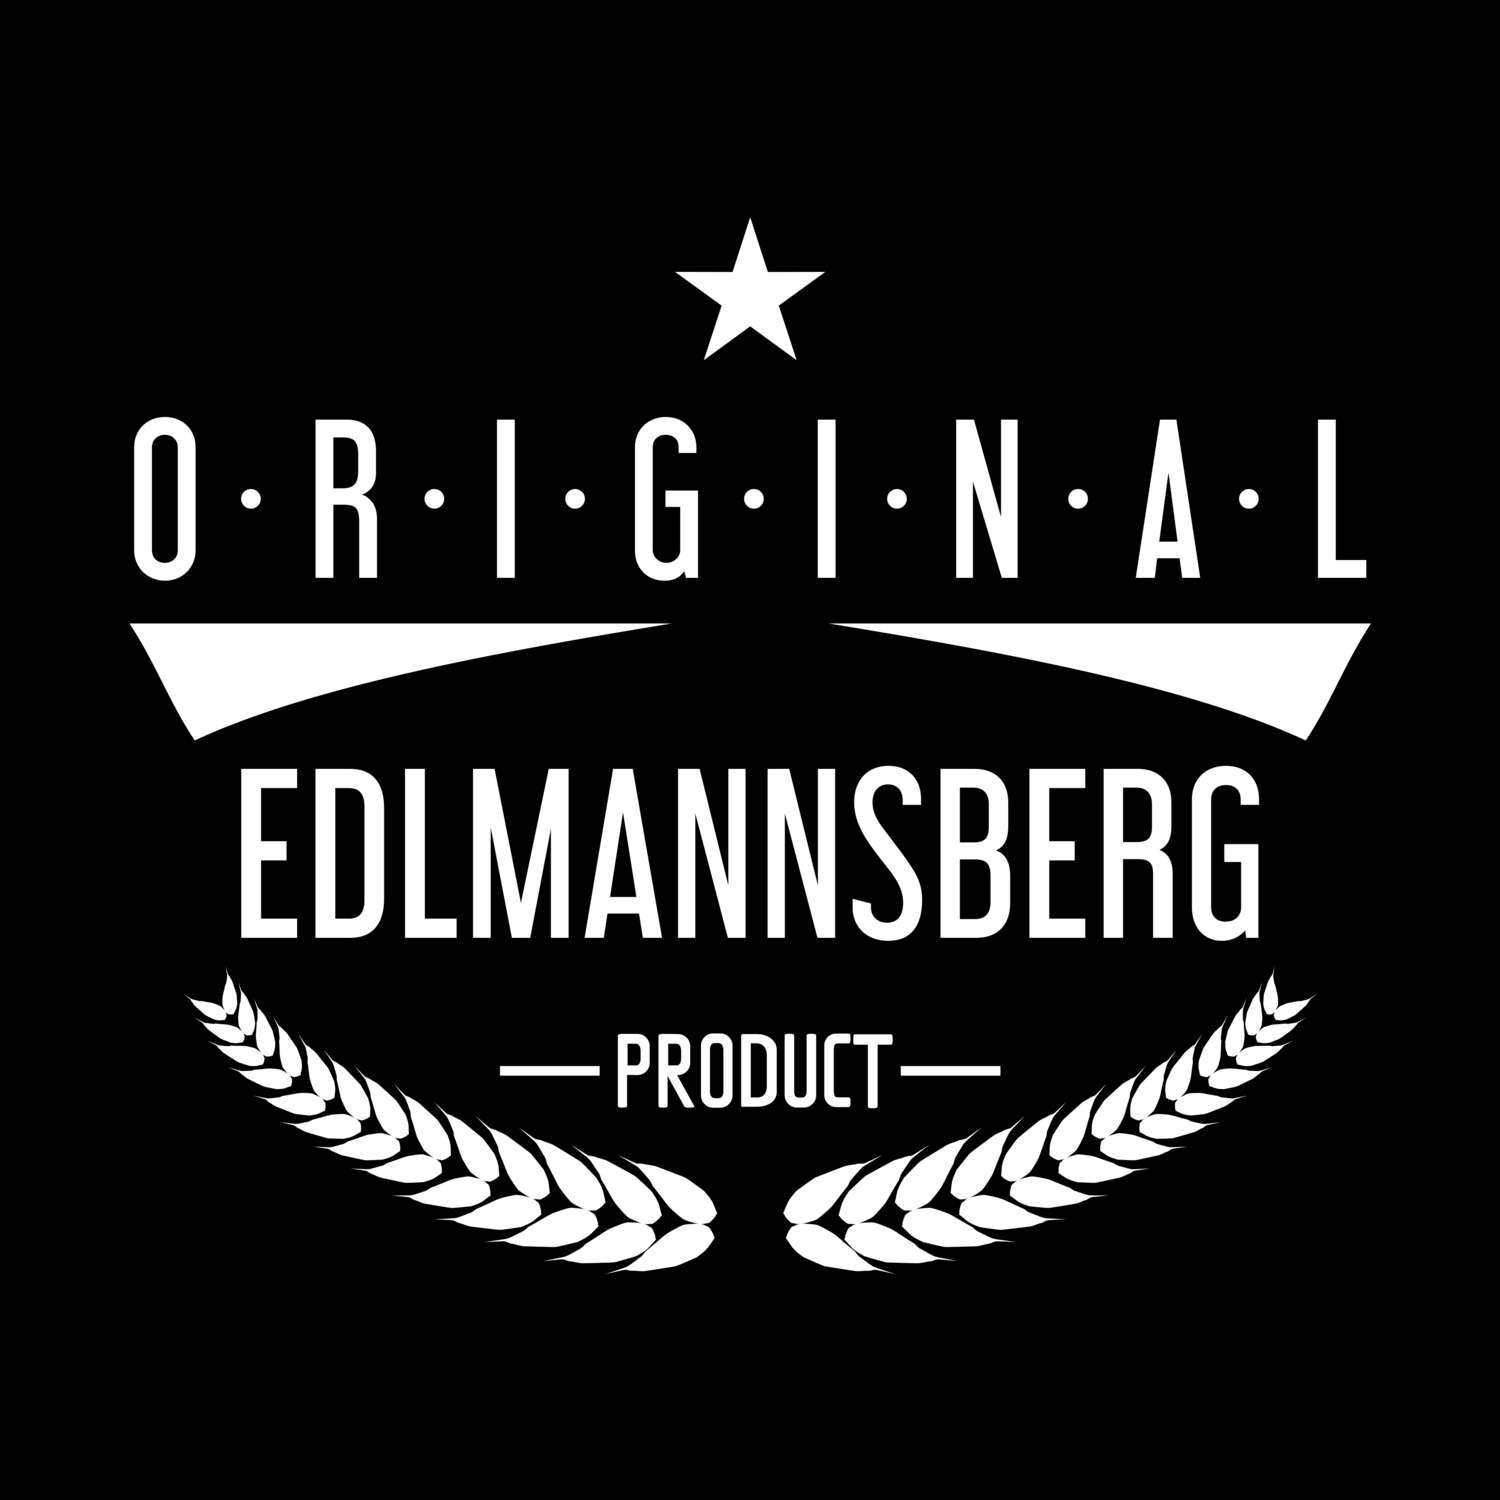 Edlmannsberg T-Shirt »Original Product«